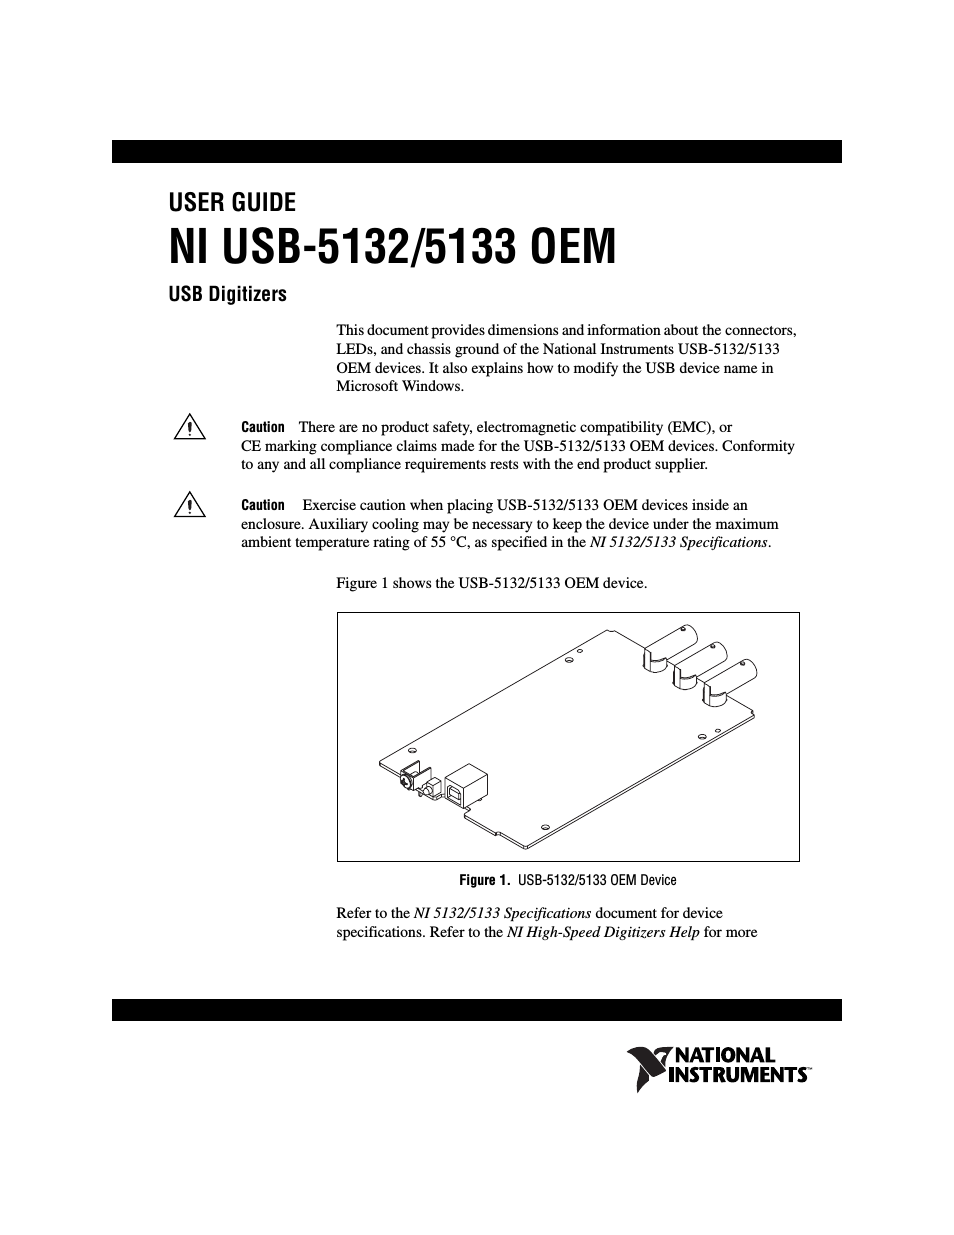 USB Digitizers NI USB-5132